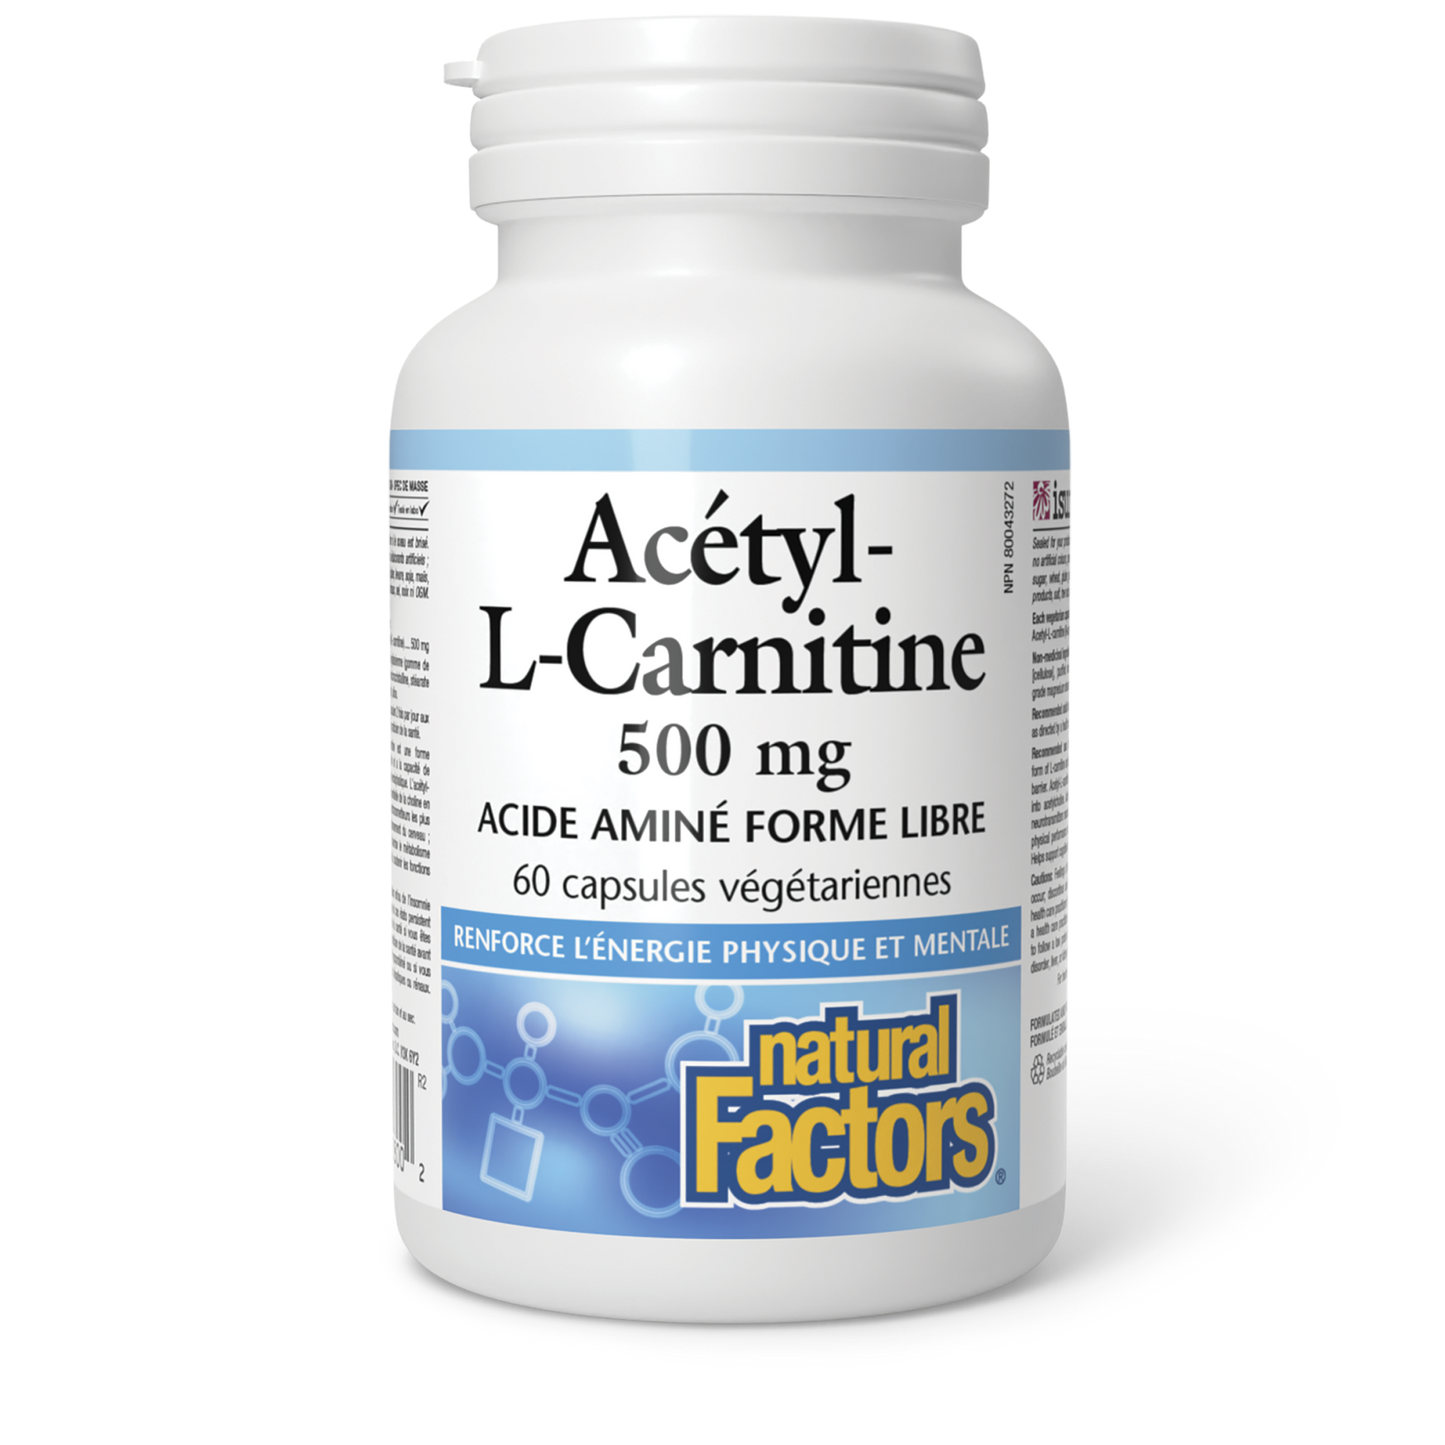 Acétyl-L-Carnitine 500 mg, Natural Factors|v|image|2800